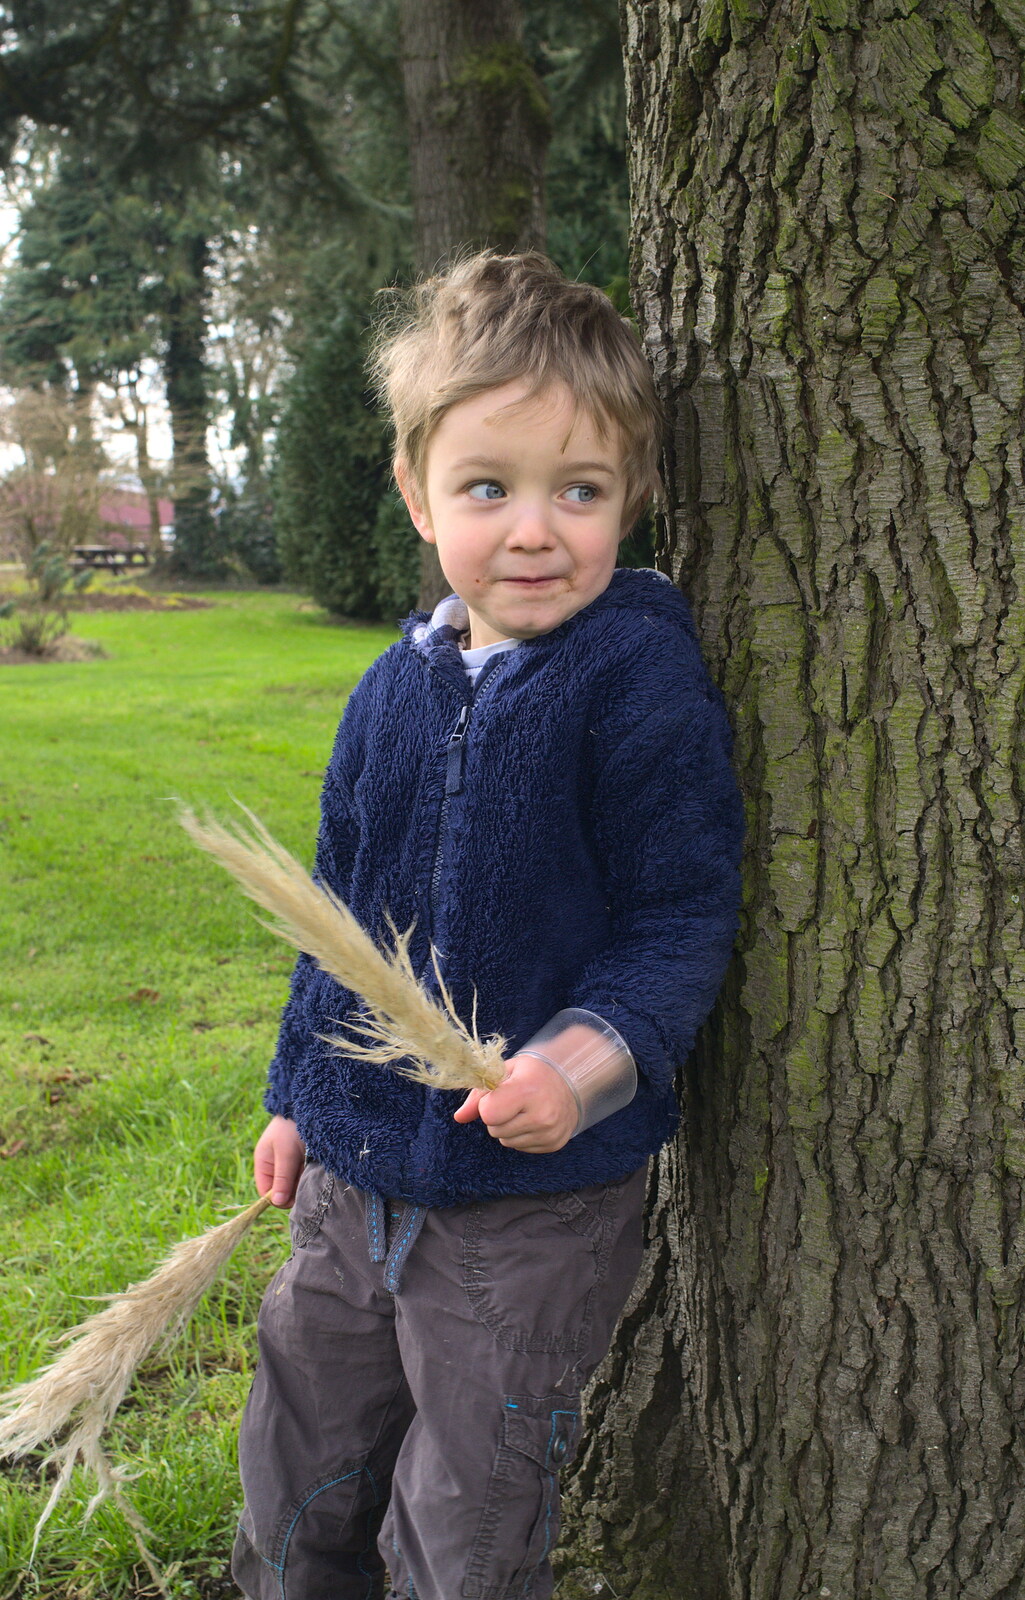 Fred looks cheeky from A Walk around Bressingham Winter Garden, Bressingham, Norfolk - 3rd March 2013